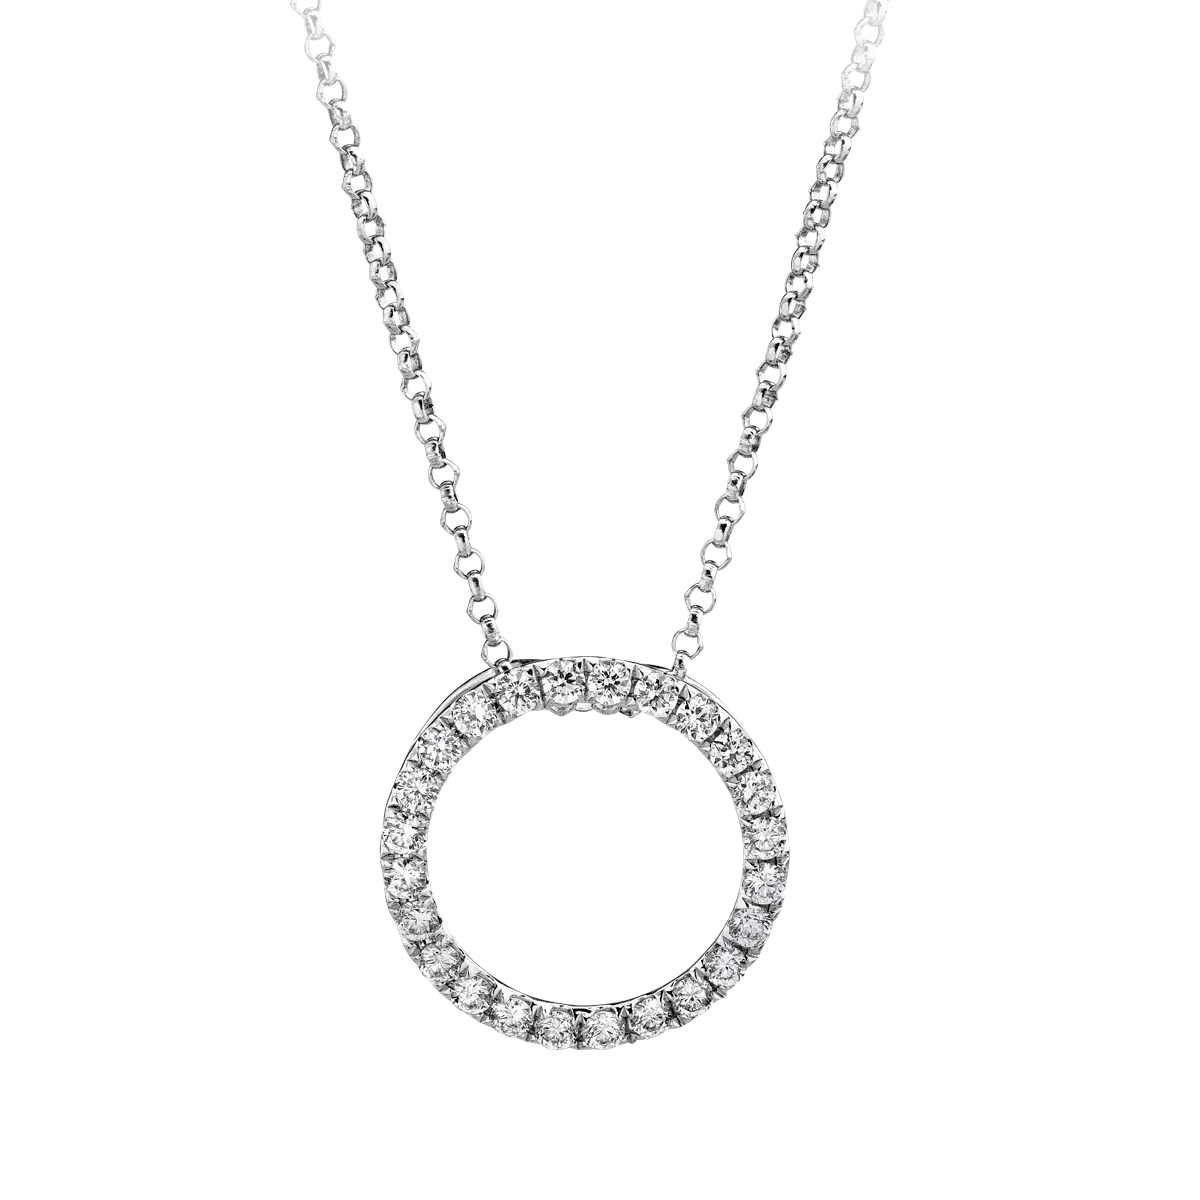 18K white gold pendant chain with 0.39ct diamonds